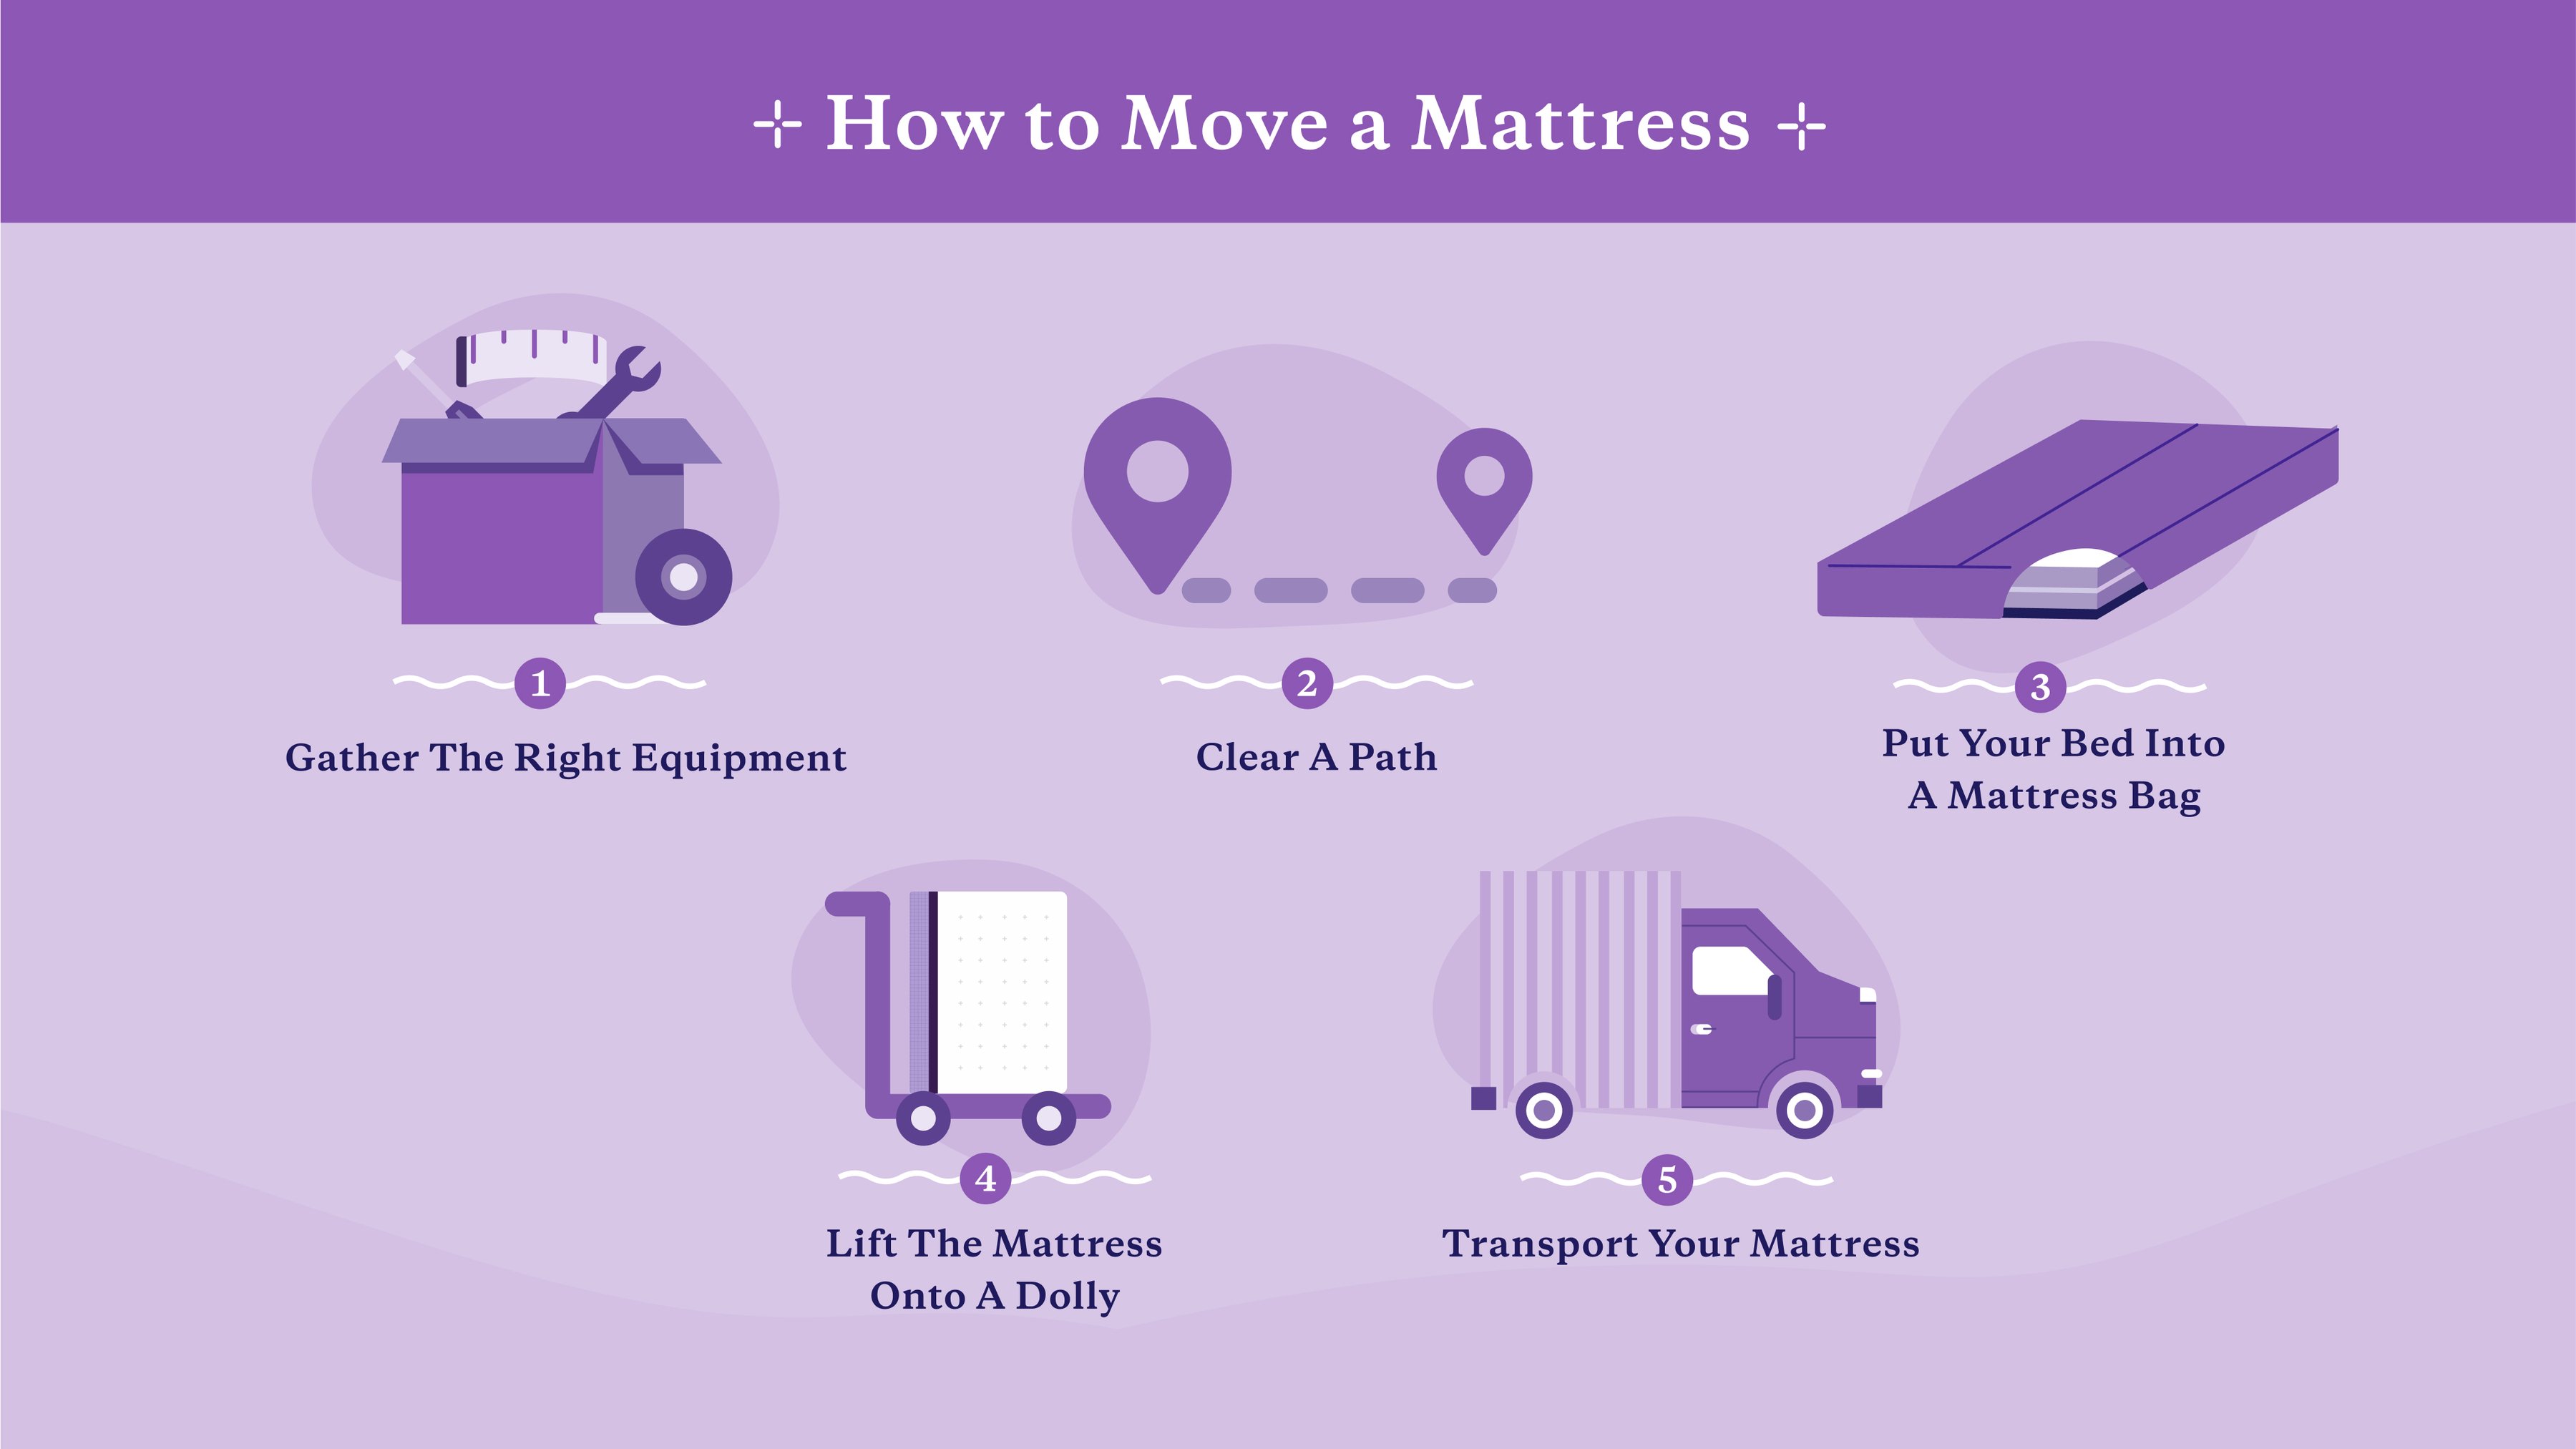 Steps to move a mattress